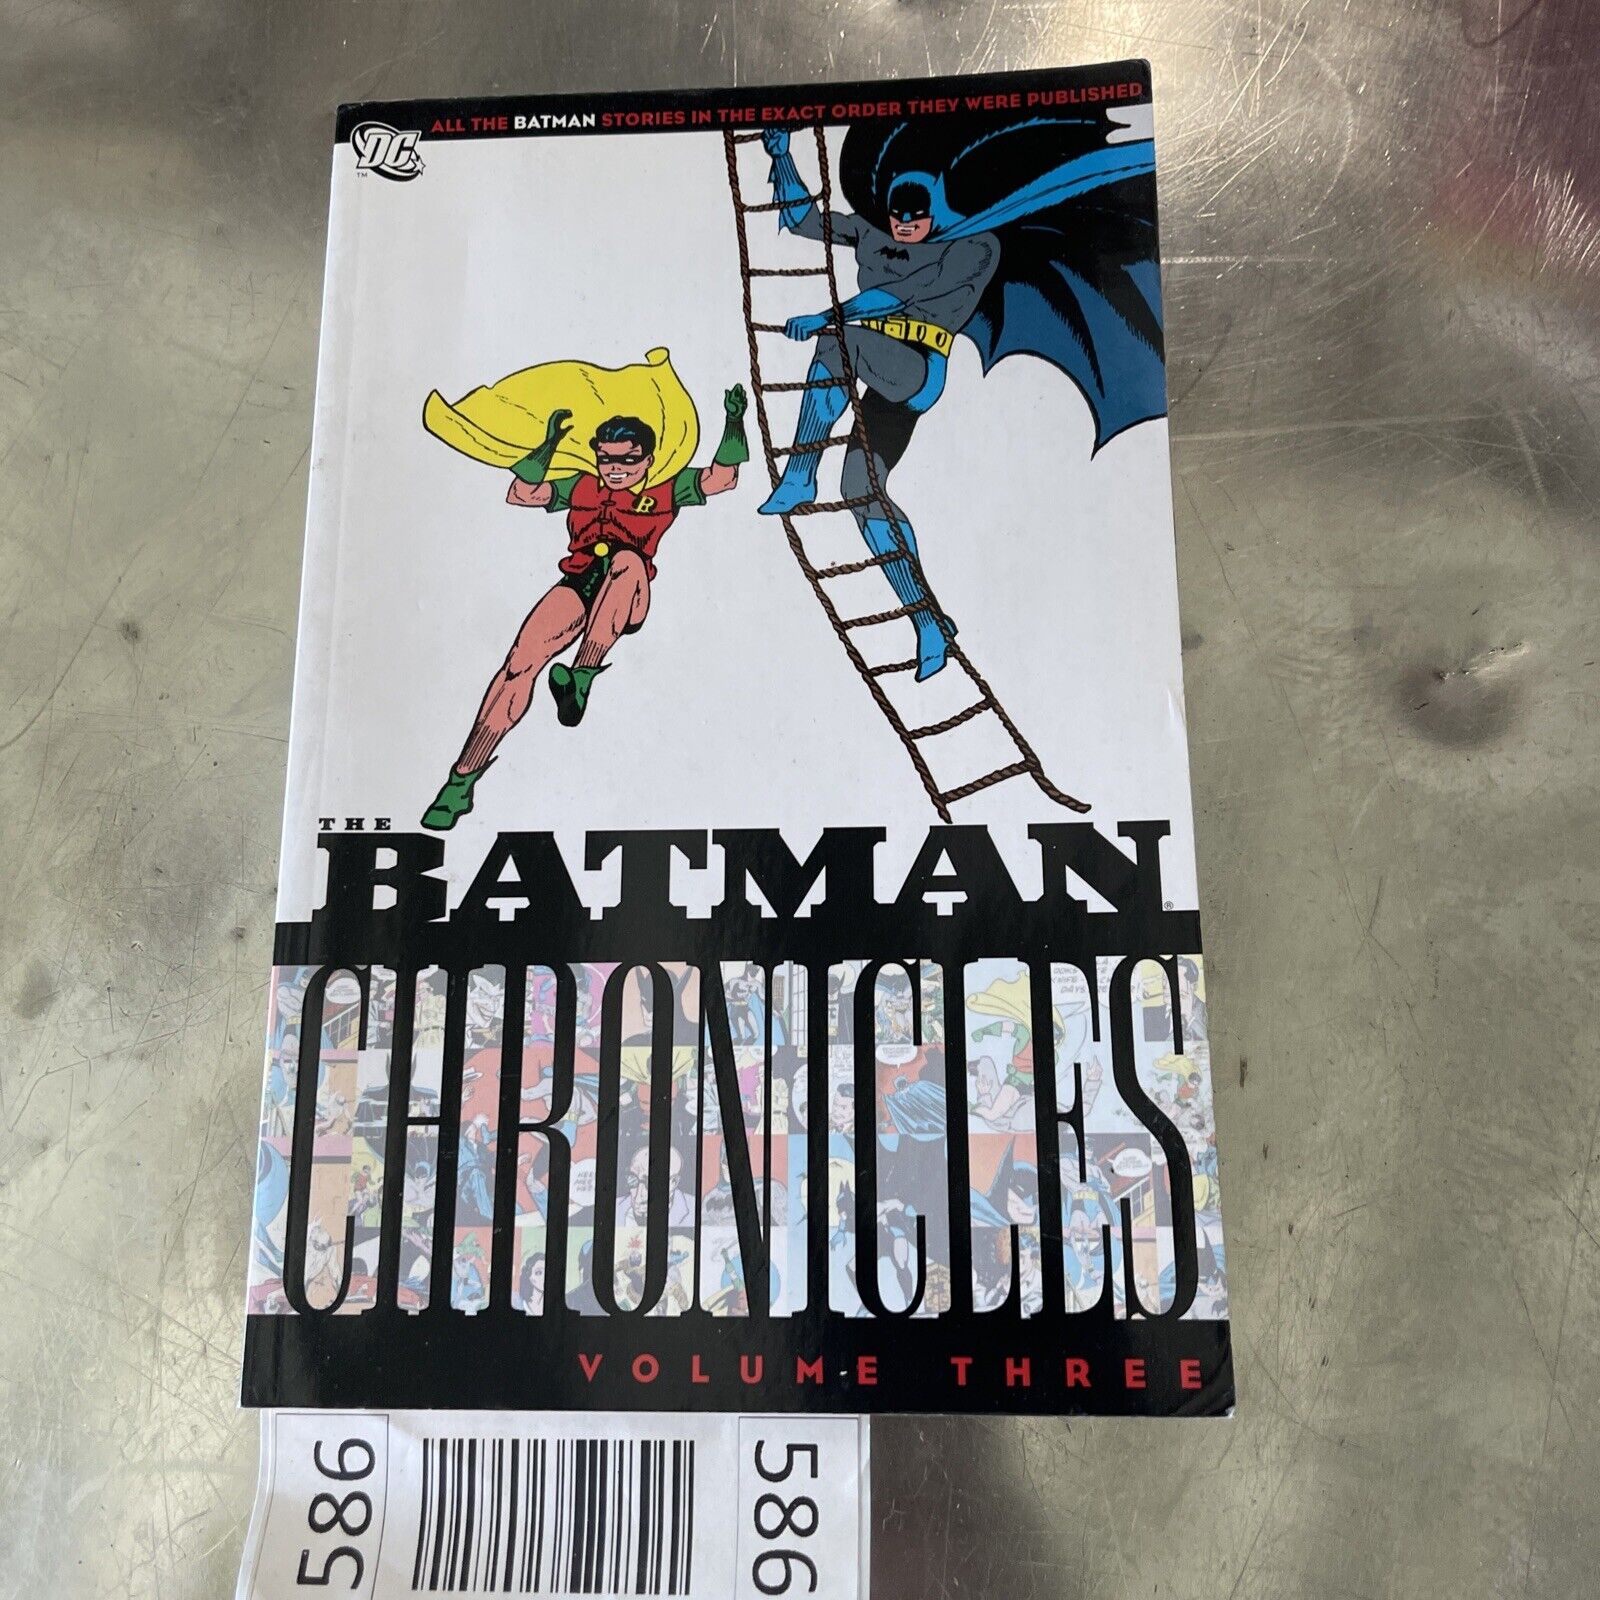 BATMAN CHRONICLES, VOL. 3 By Bob Kane & Bill Finger.Good